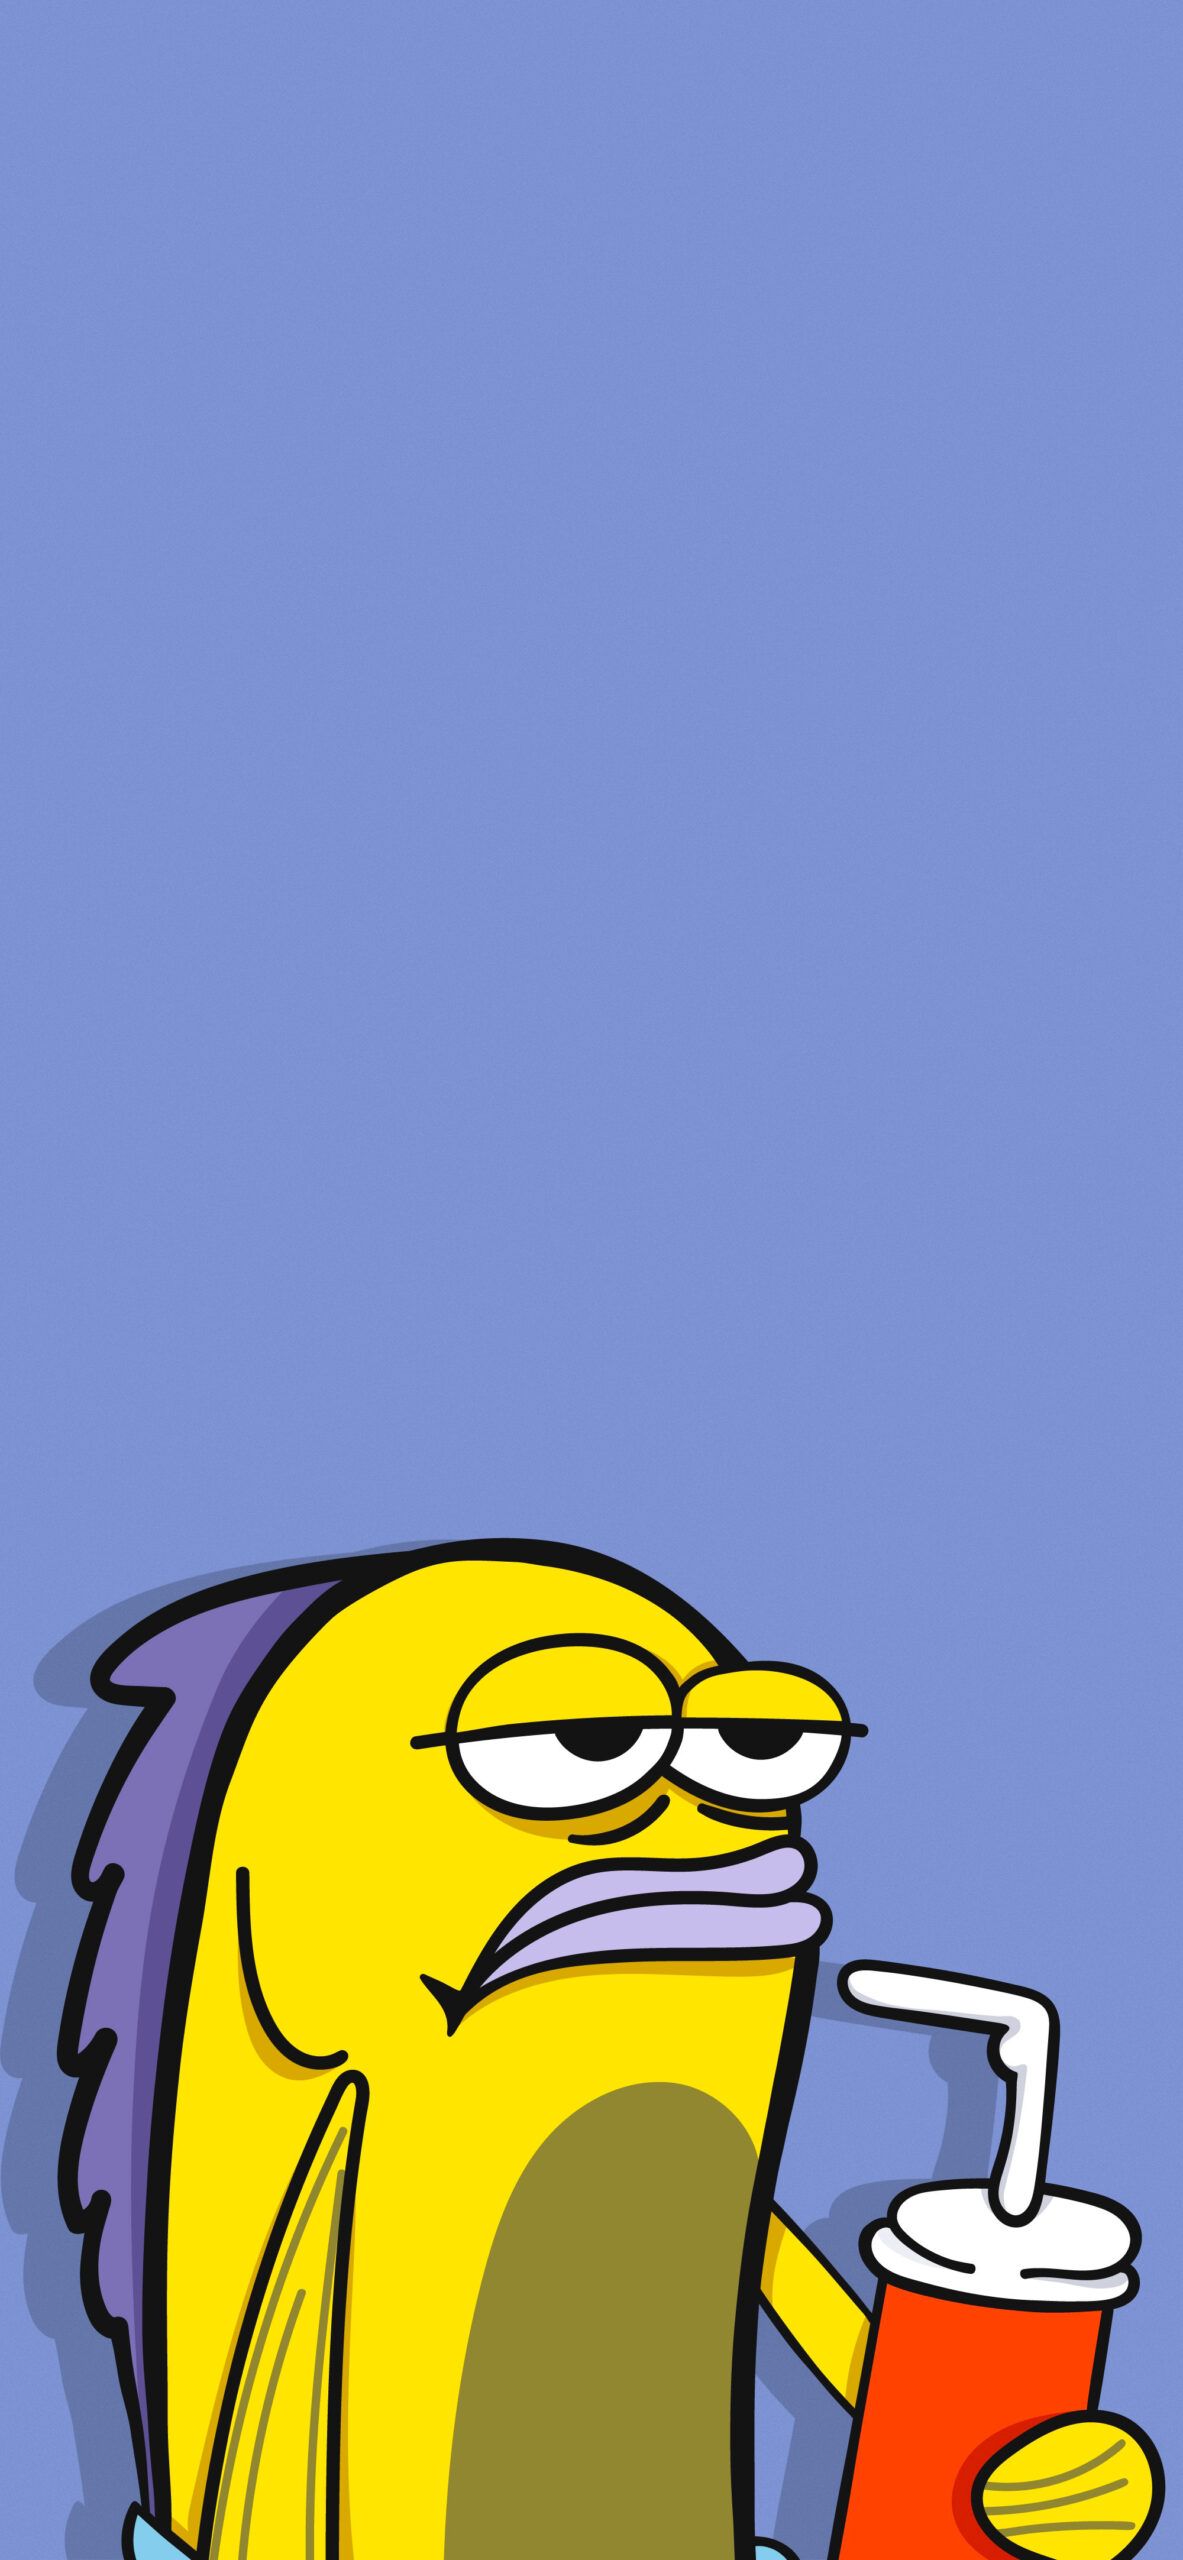 IPhone wallpaper of a cartoon character drinking a soda - SpongeBob